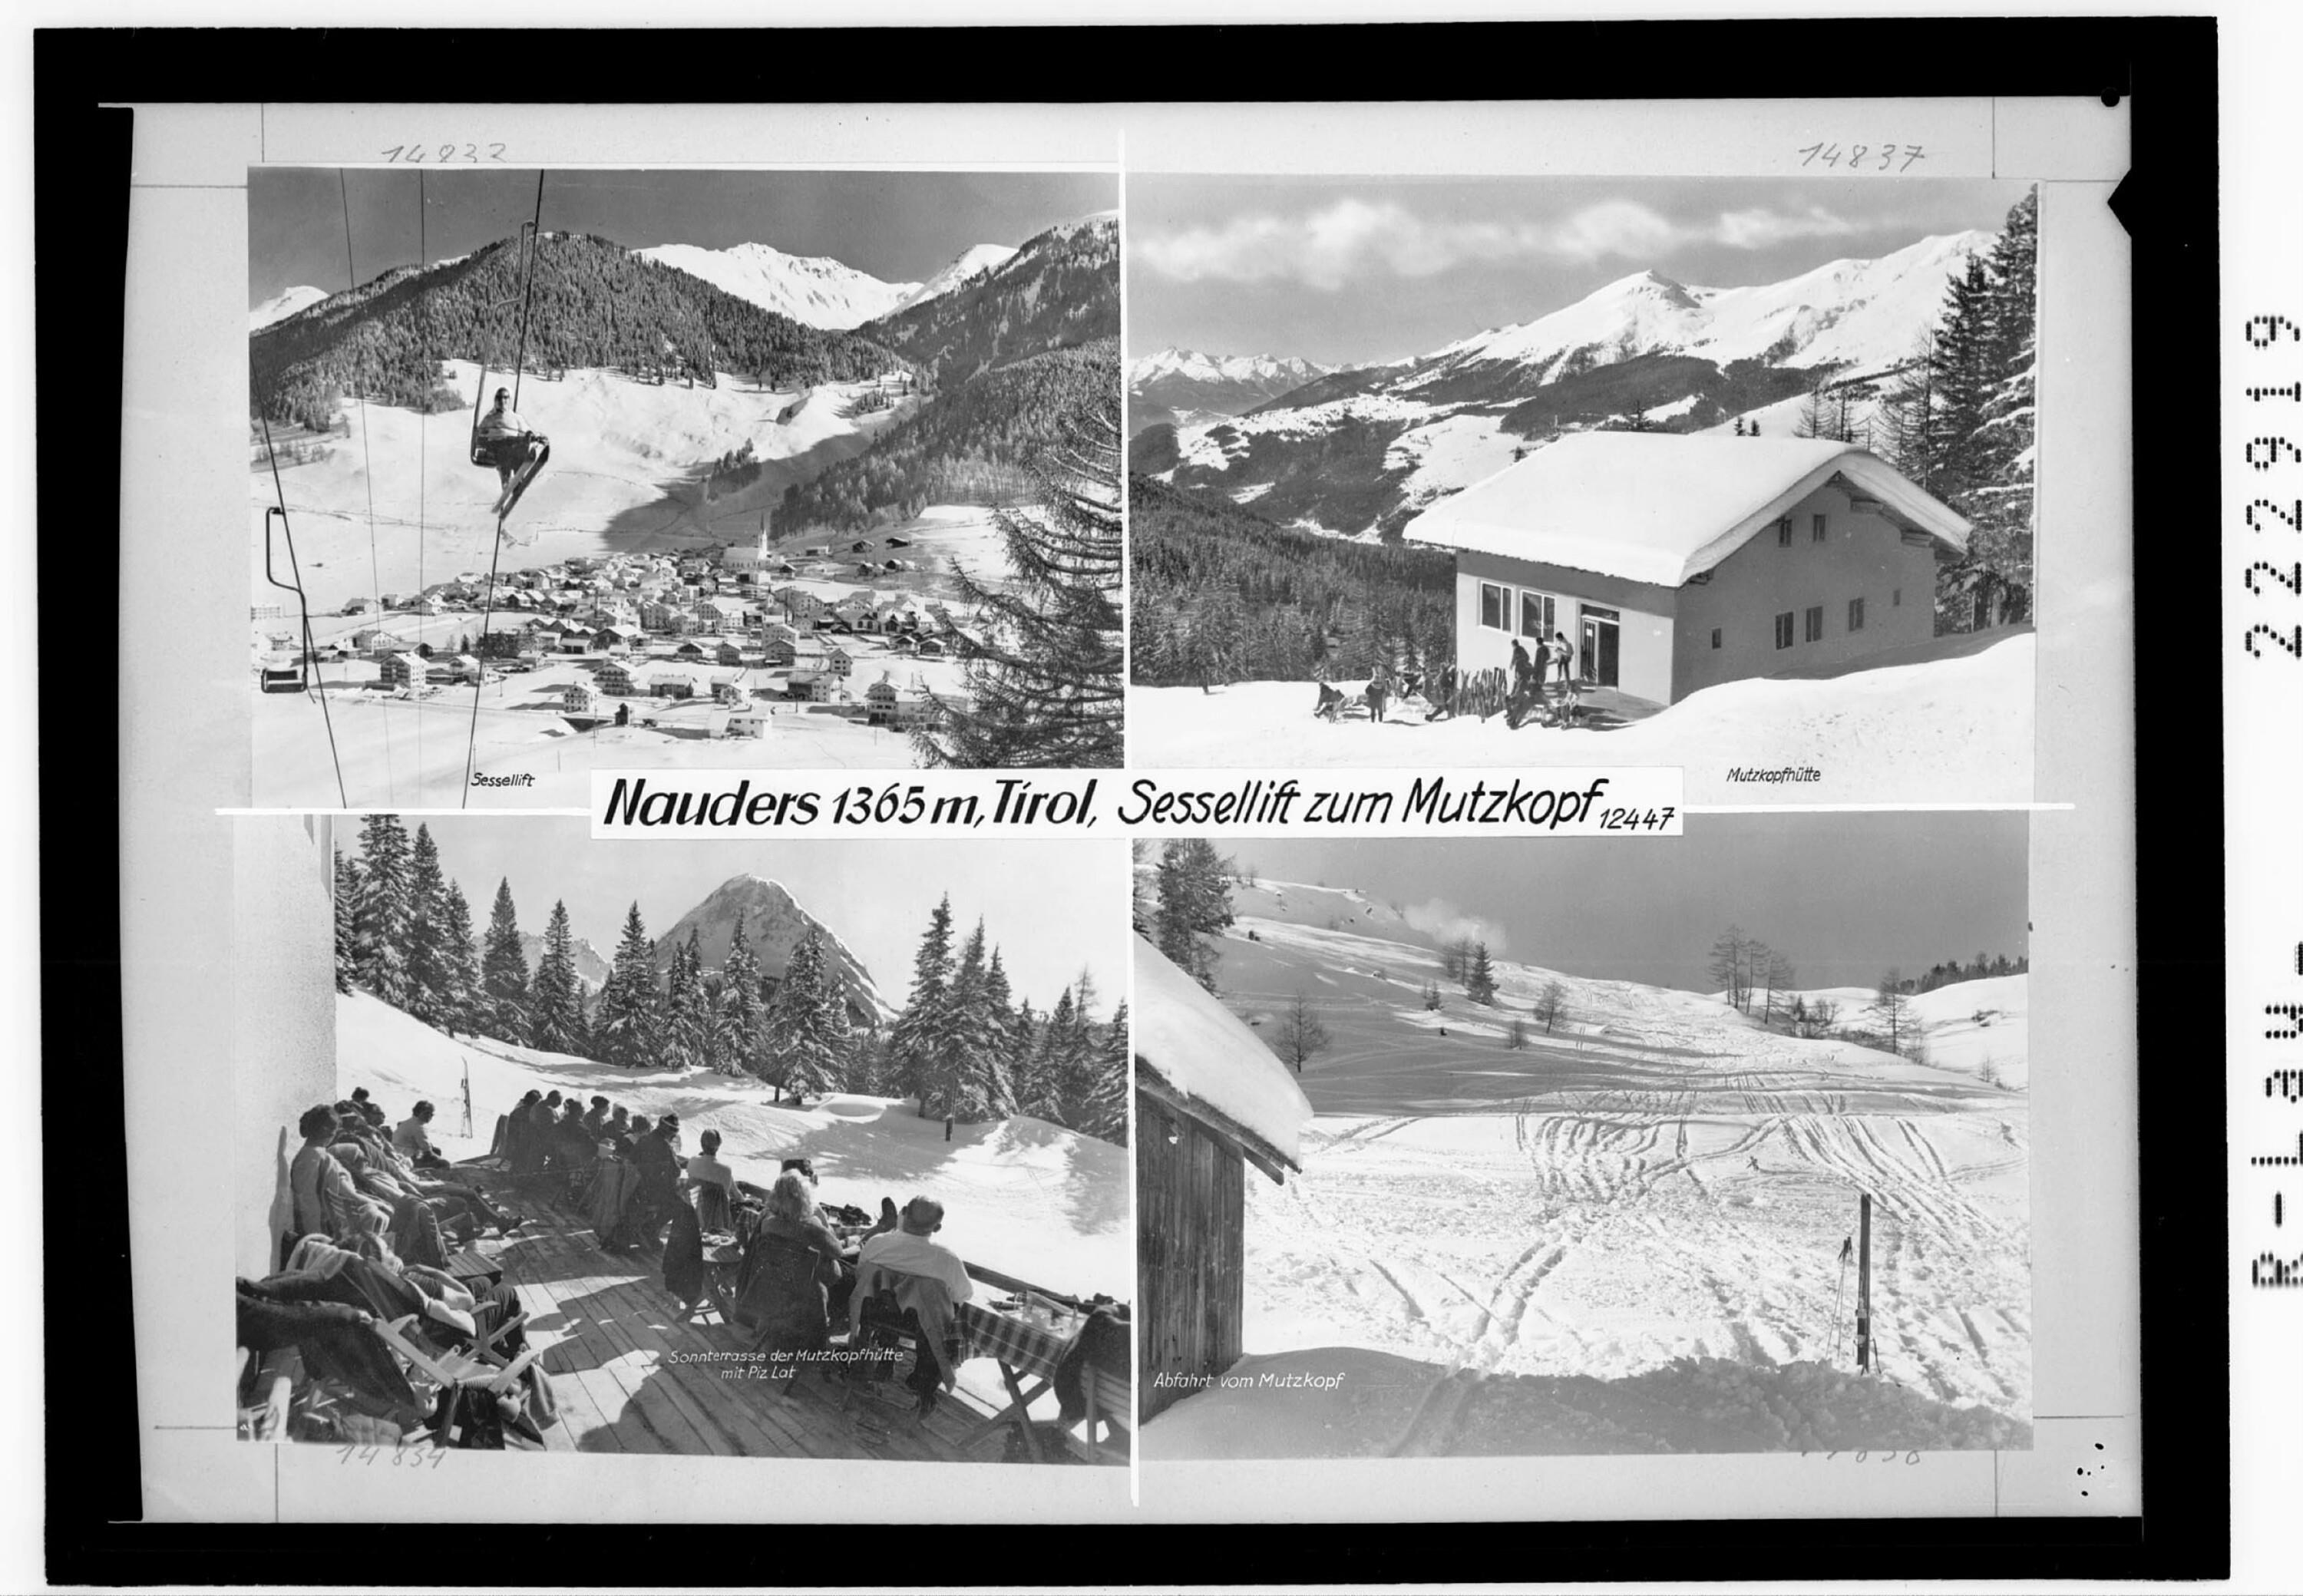 Nauders 1365 m / Tirol / Sessellift zum Mutzkopf></div>


    <hr>
    <div class=